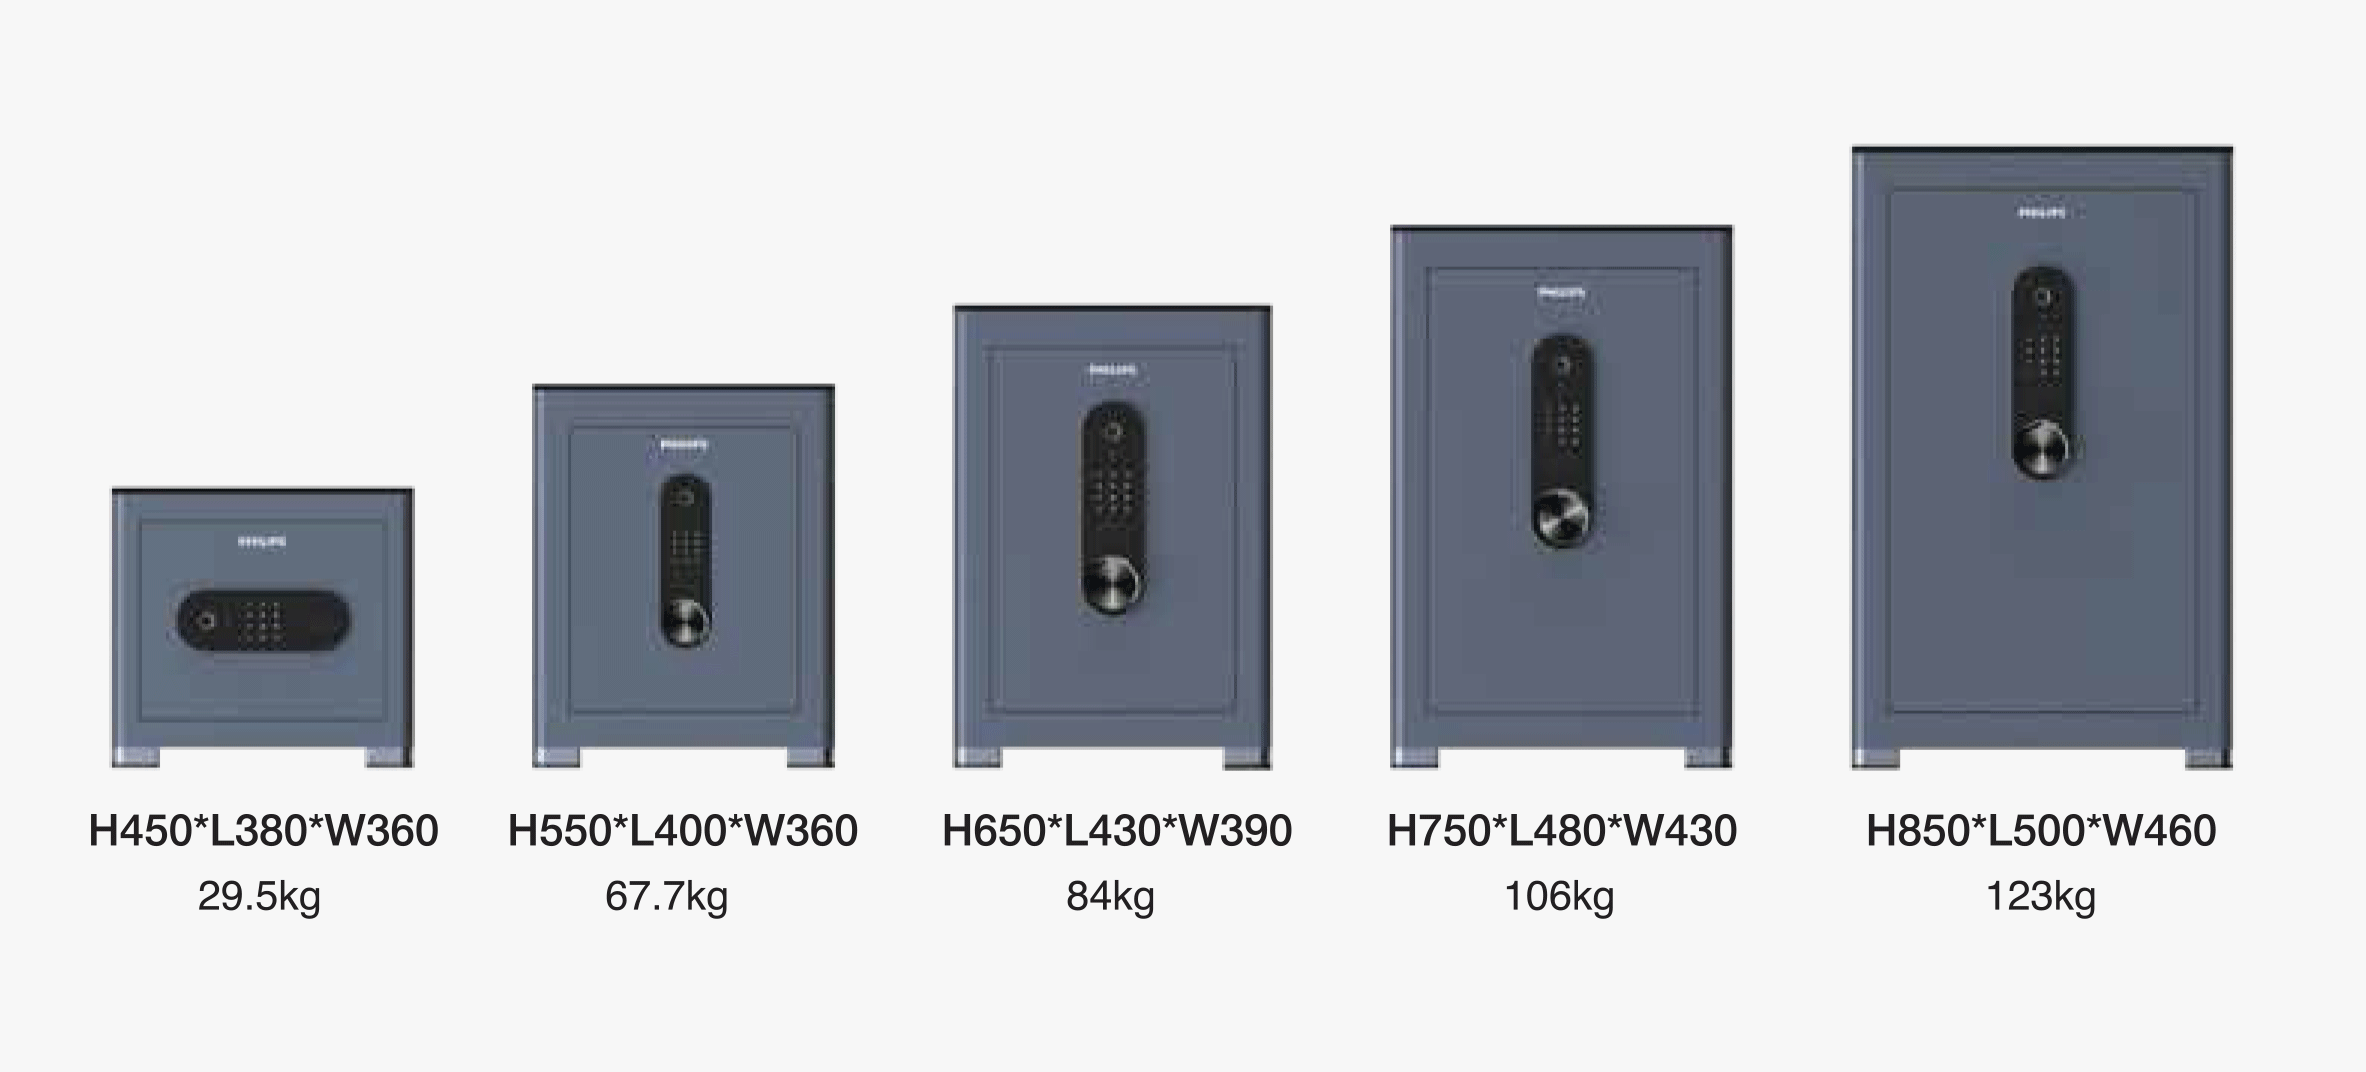 Các hạng cân của két sắt Philips SBX601